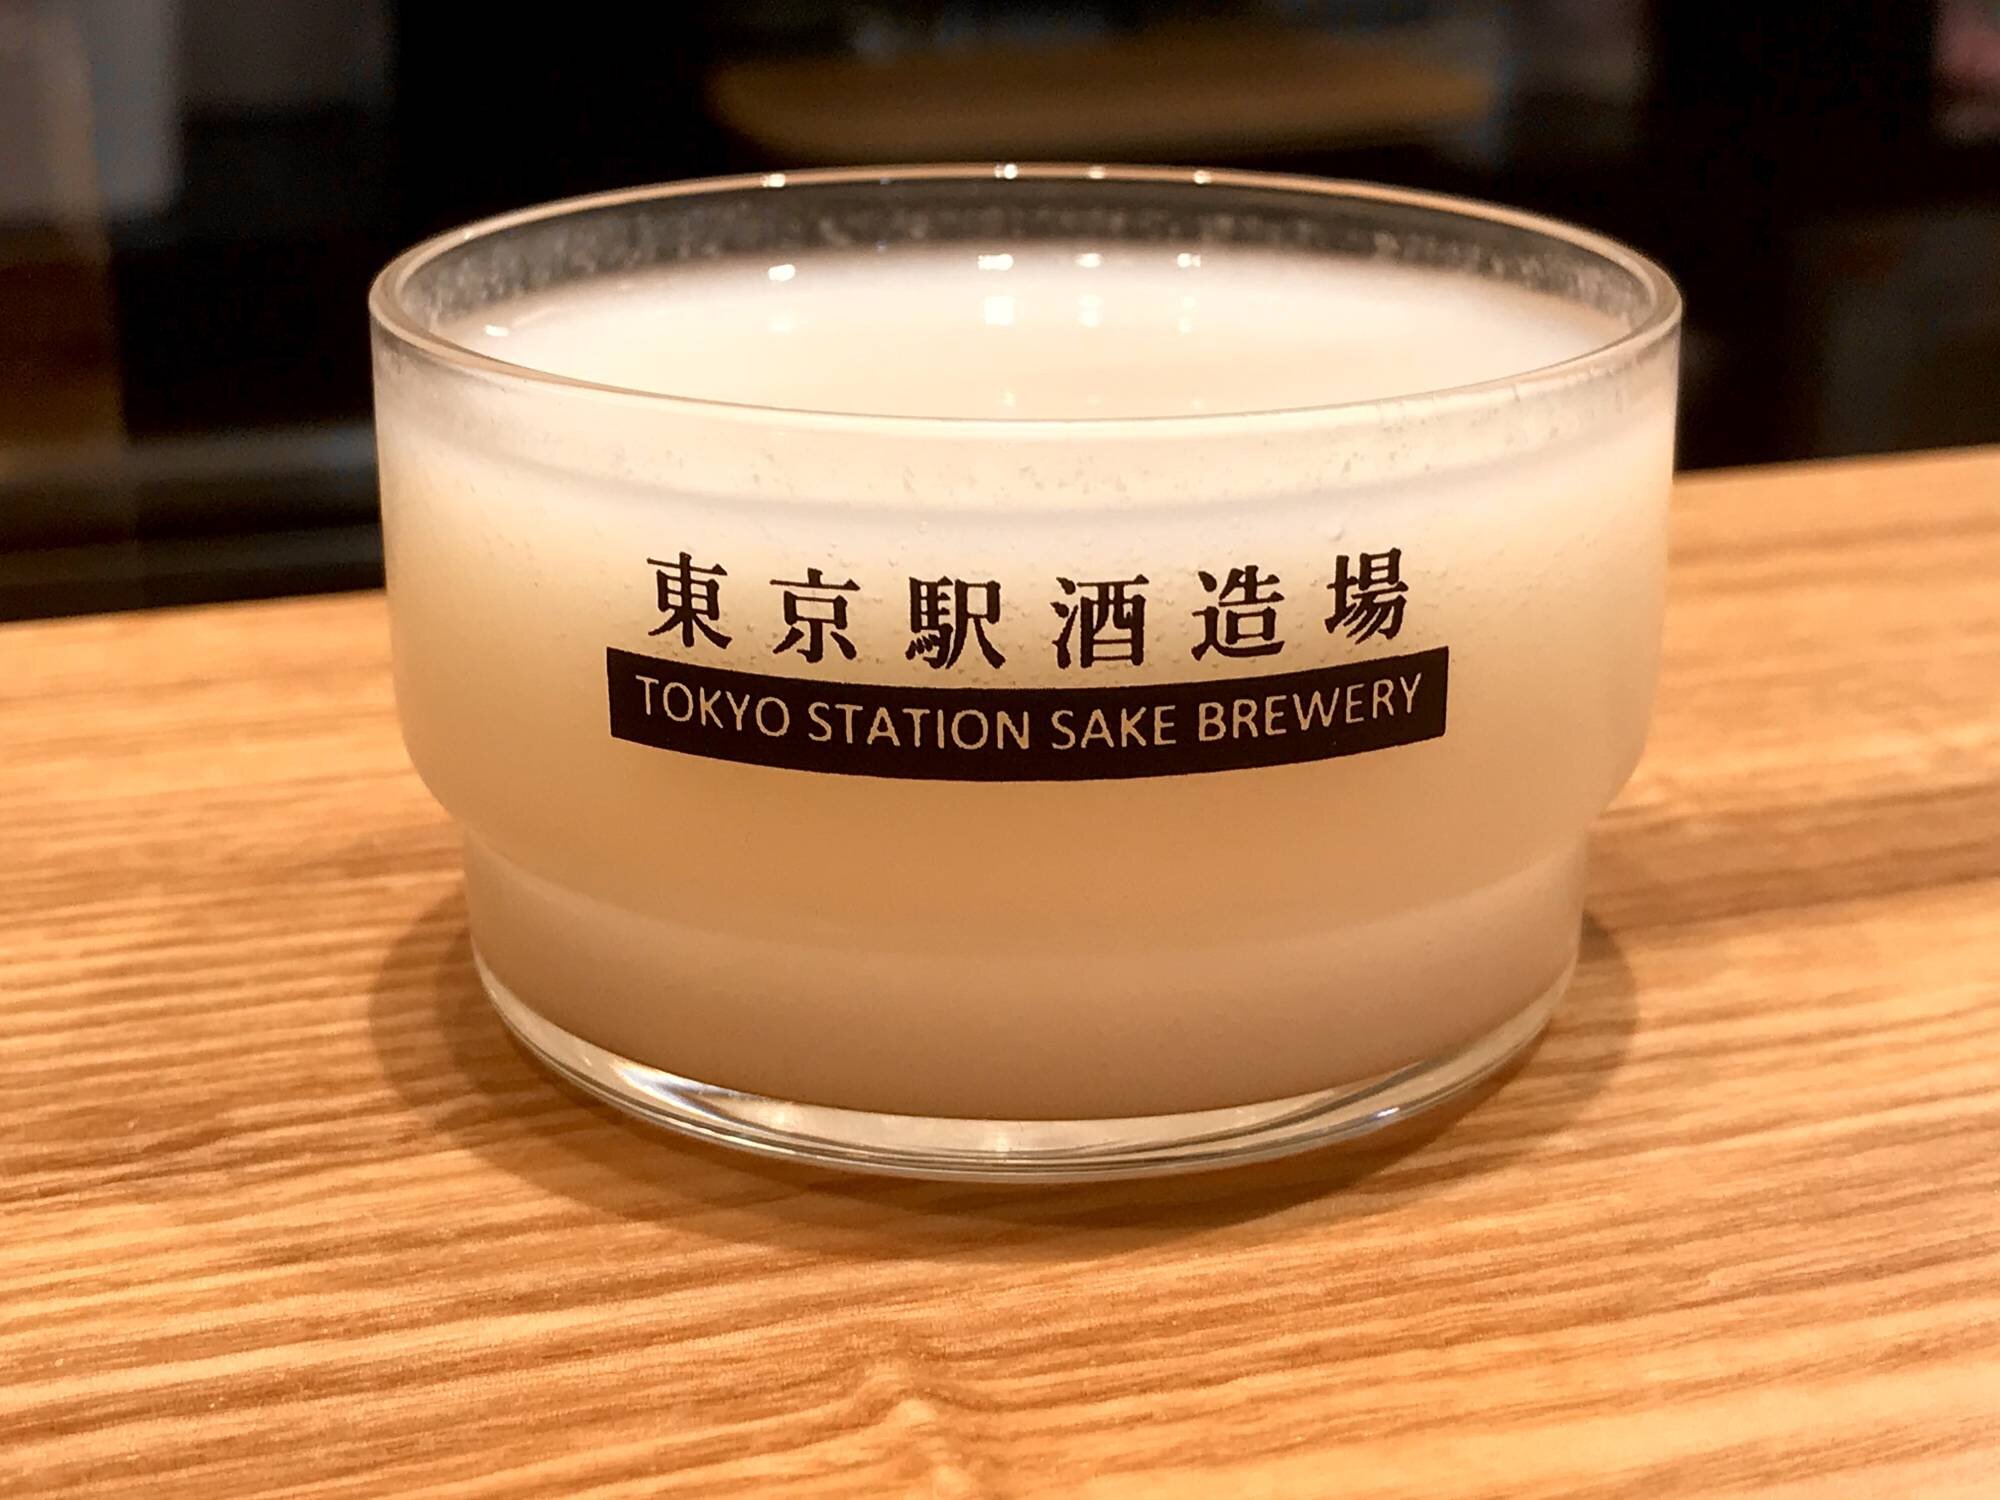 Hasegawa Saketen Gransta: A sake lover's boon beneath Tokyo Station